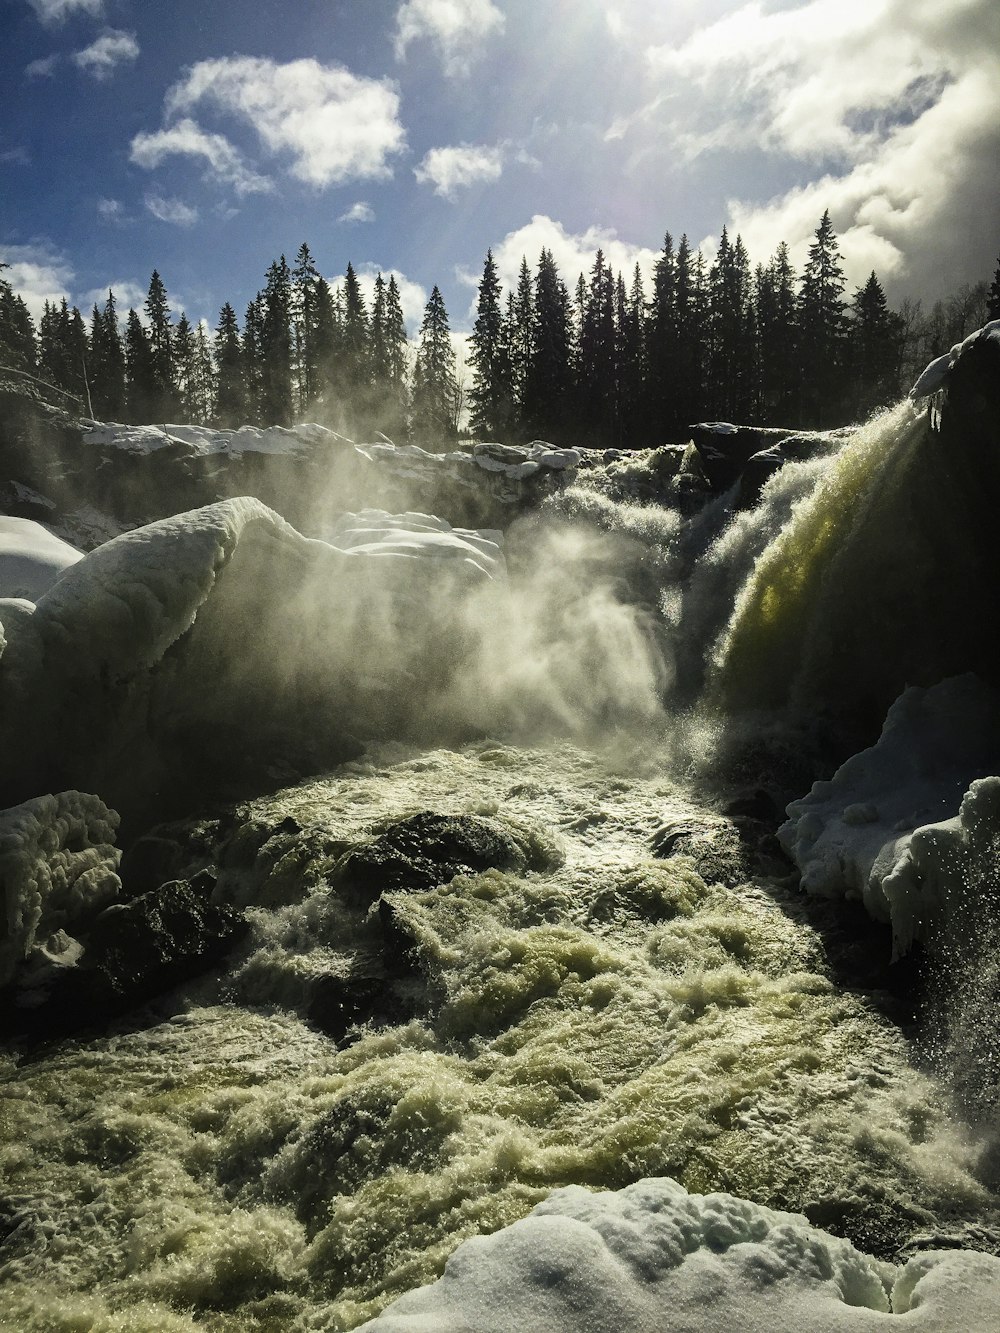 grayscale photo of waterfalls near trees